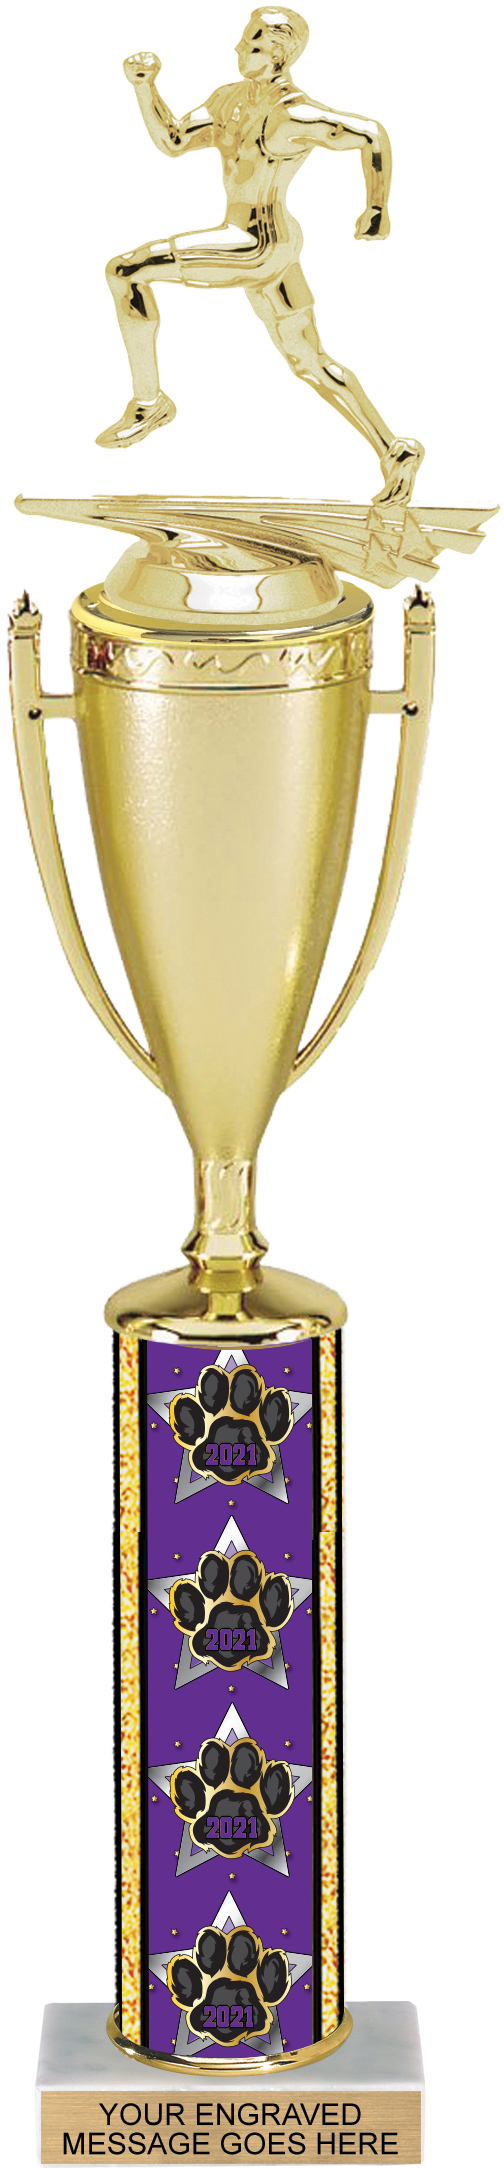 Year 17 inch Paw Column Cup Trophy